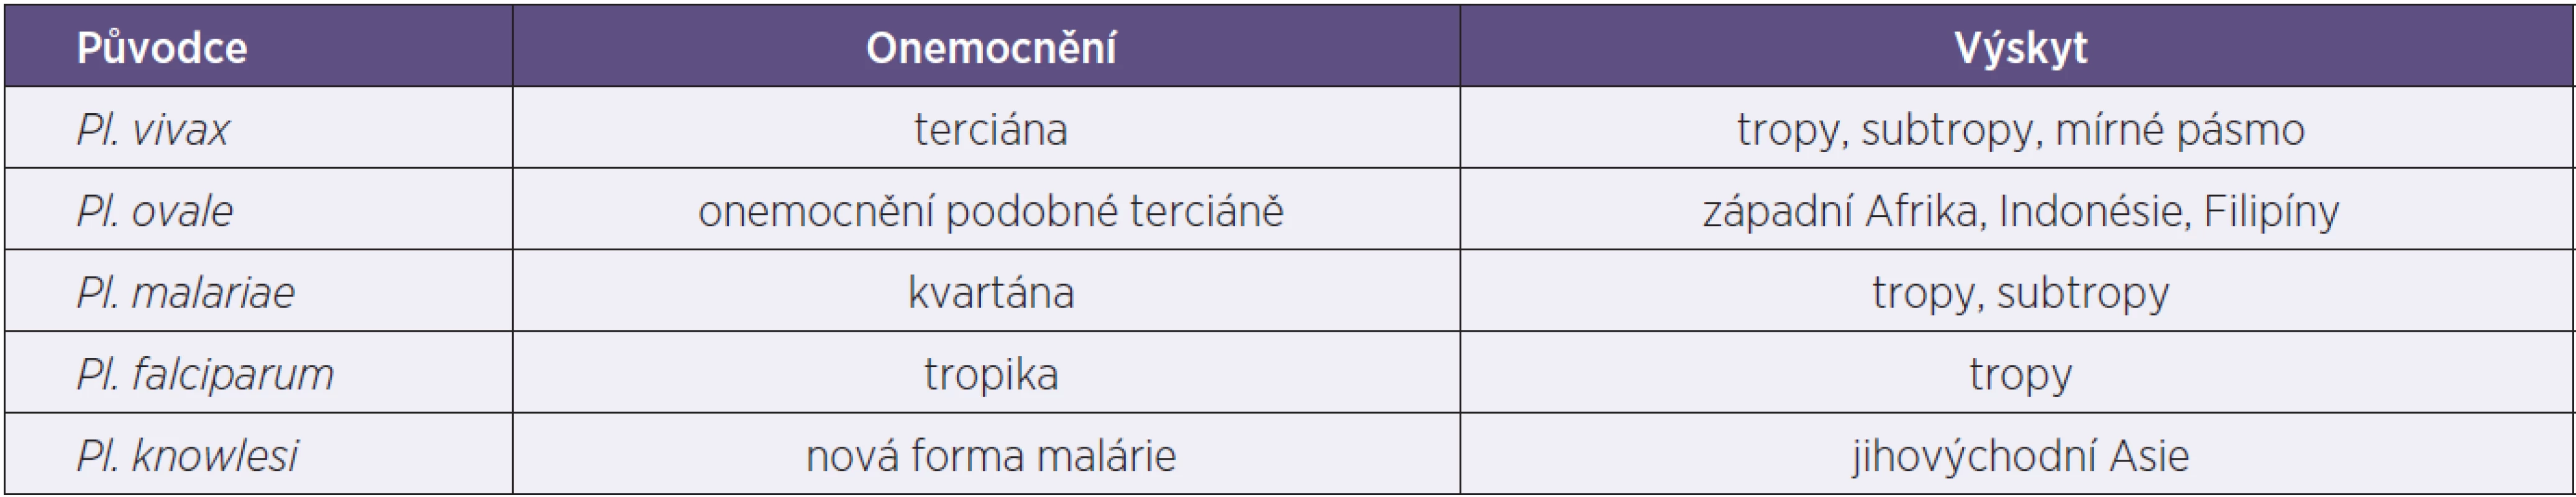 Přehled původců, forem malárie a výskyt
Table 1. Causative agents and malaria forms and incidence